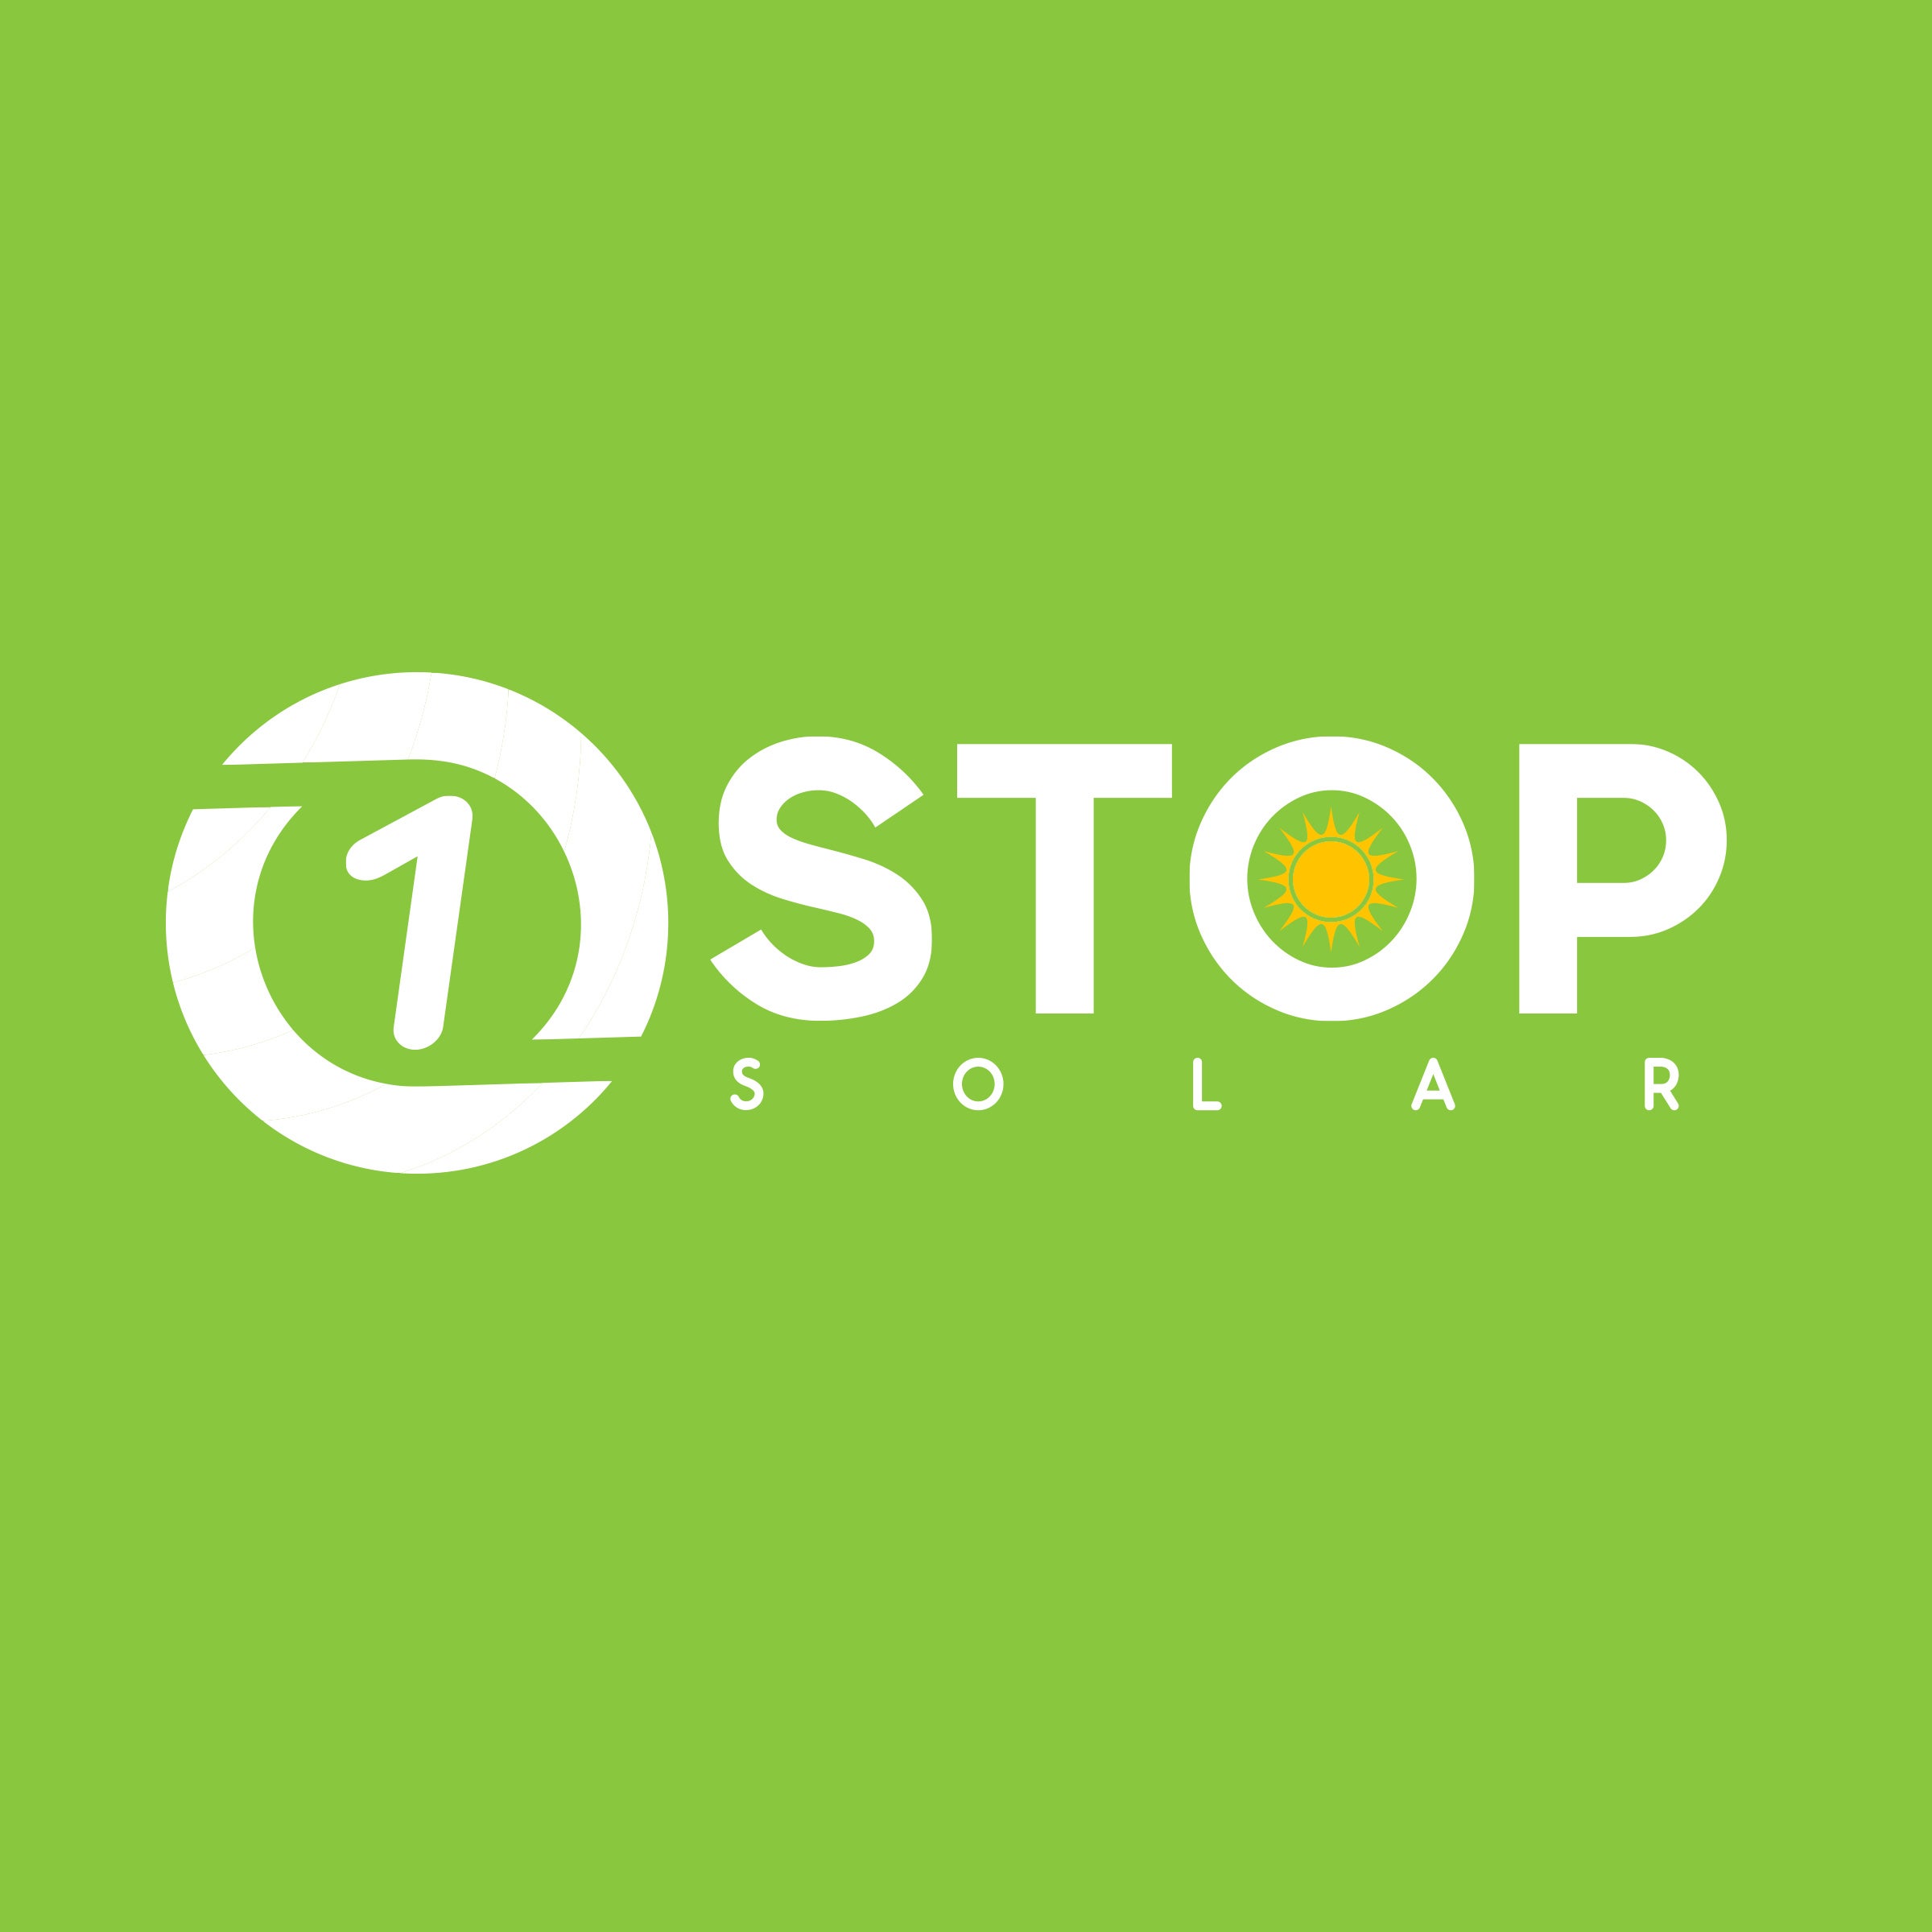 1 Stop Solar logo